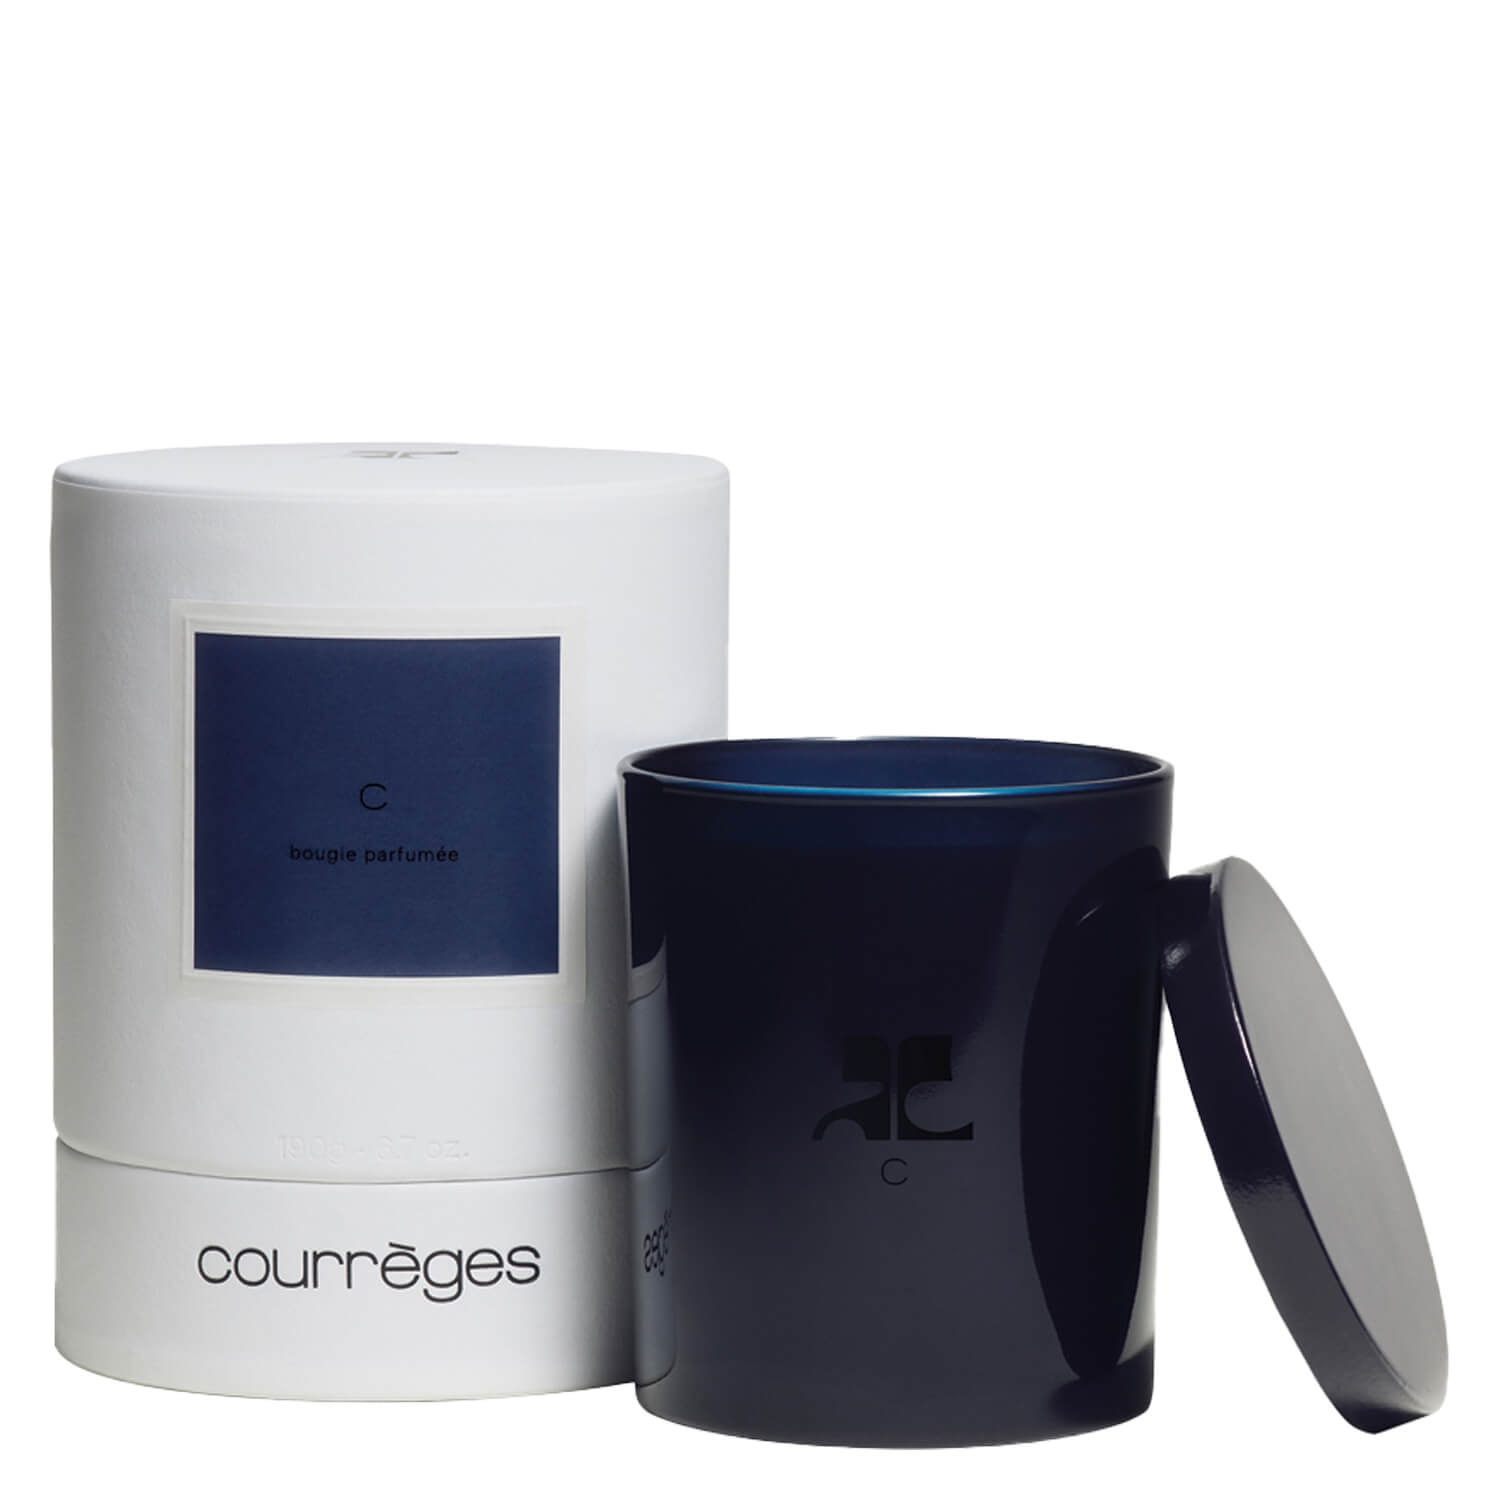 Produktbild von courrèges - C candle